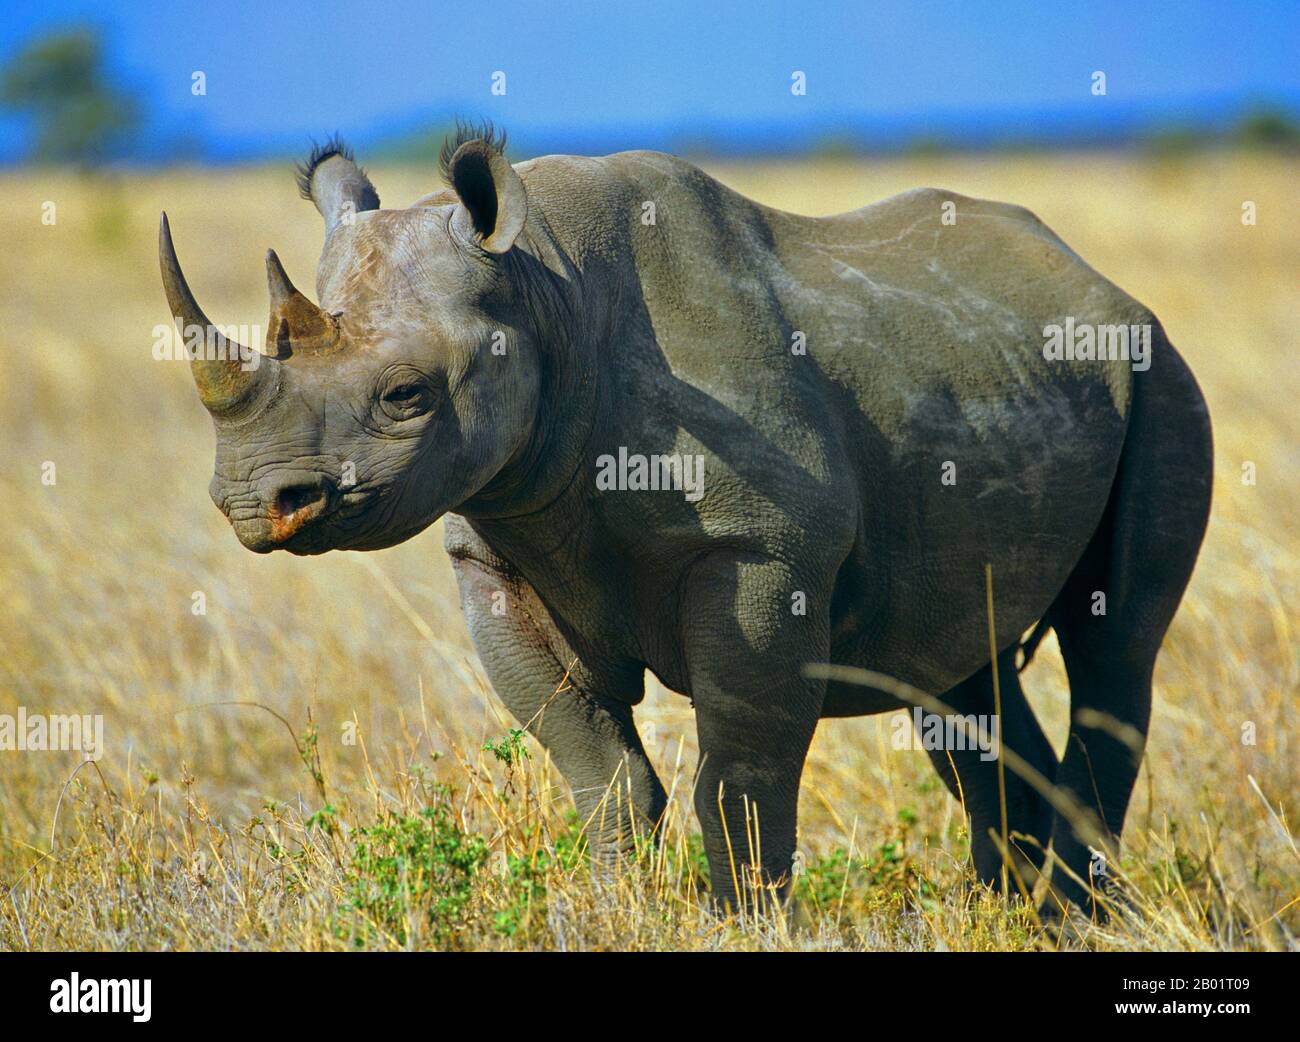 black rhinoceros, hooked-lipped rhinoceros, browse rhinoceros (Diceros bicornis), standing in the savannah, side view, Africa Stock Photo